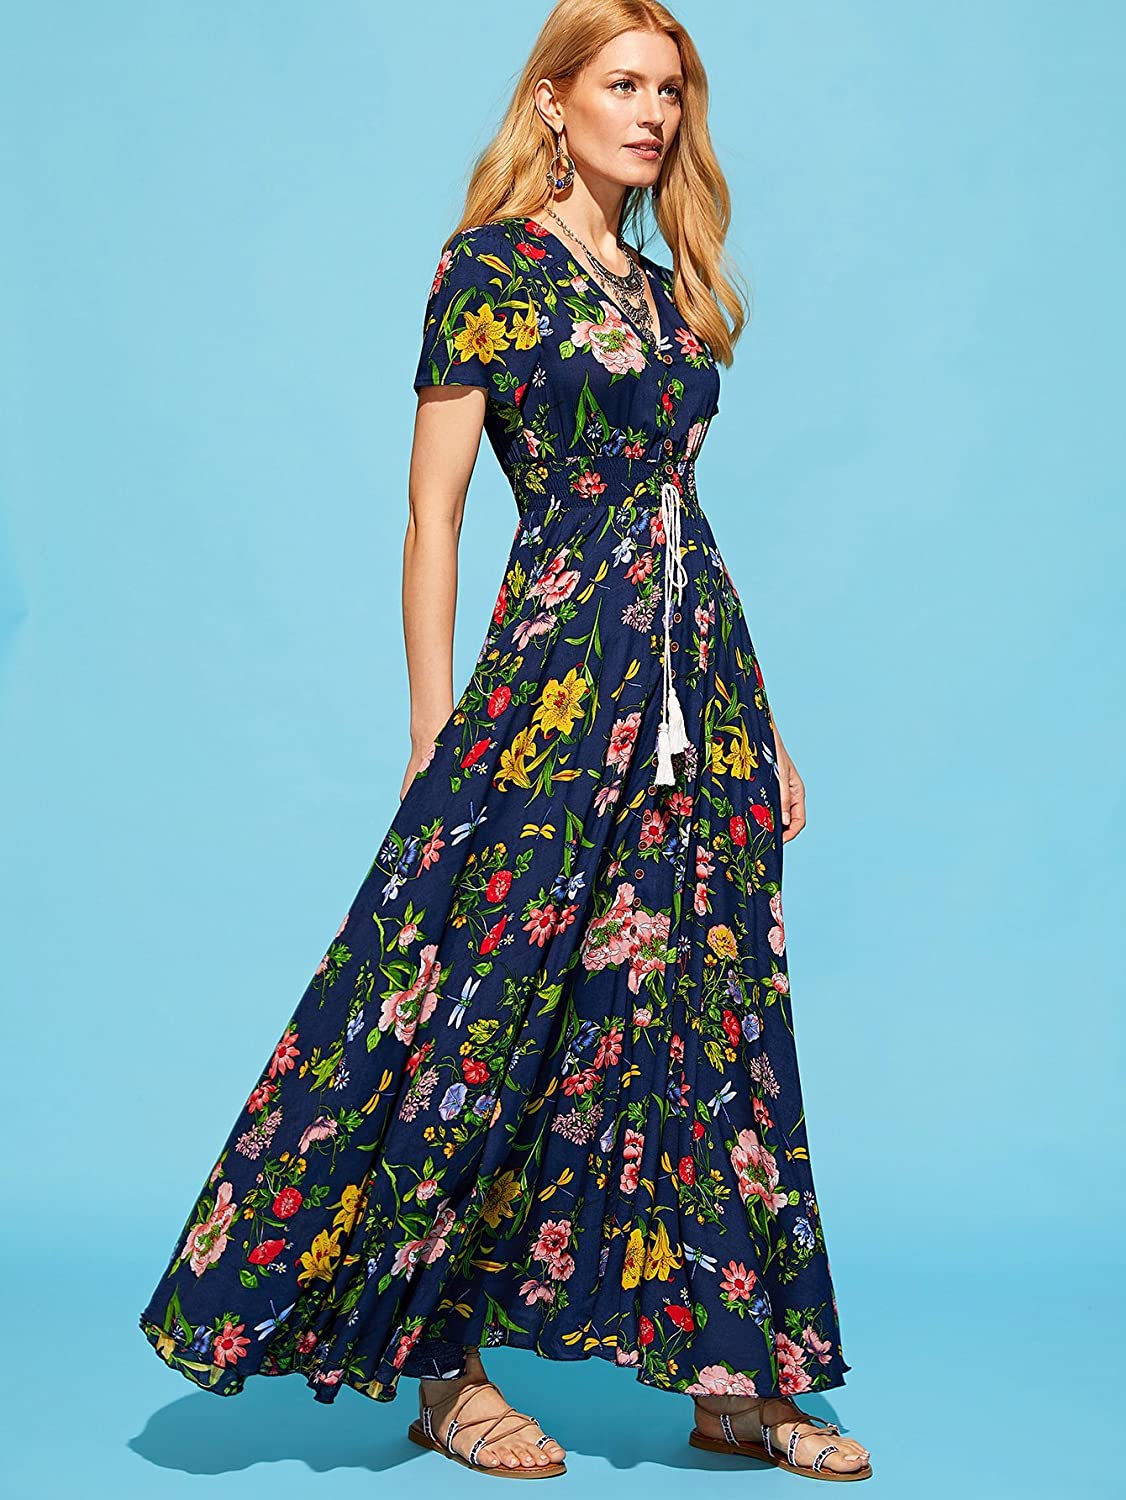 Milumia Women's Button Up Split Floral Print Flowy Party Maxi Dress ...